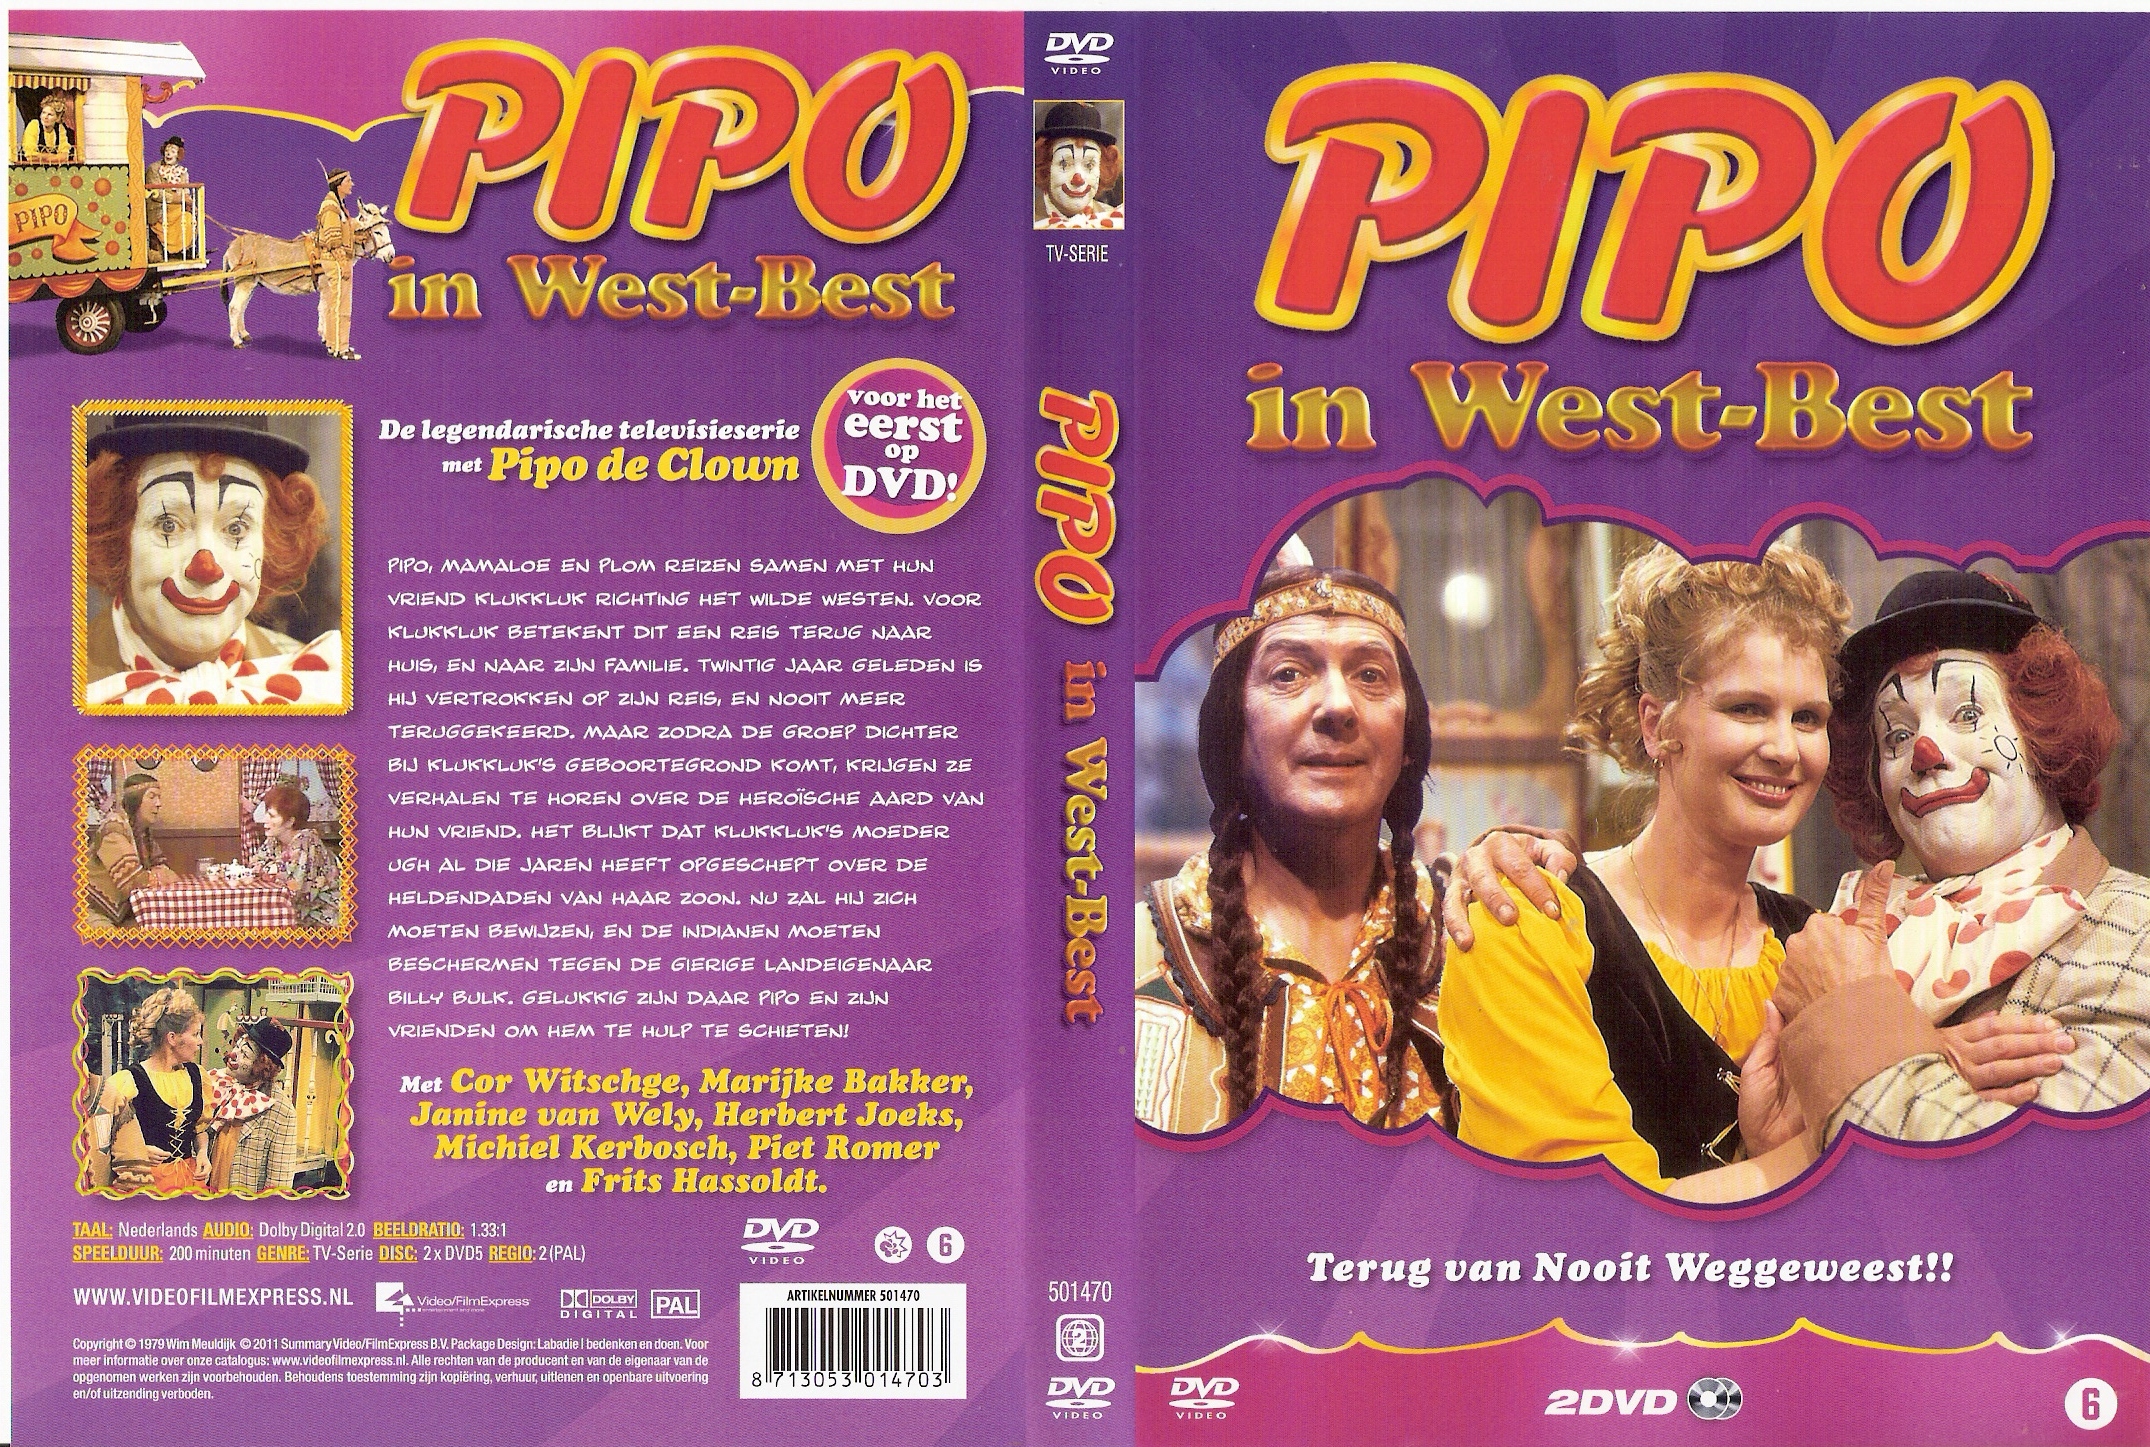 Pipo de Clown West - Best DvD 1 (1980)